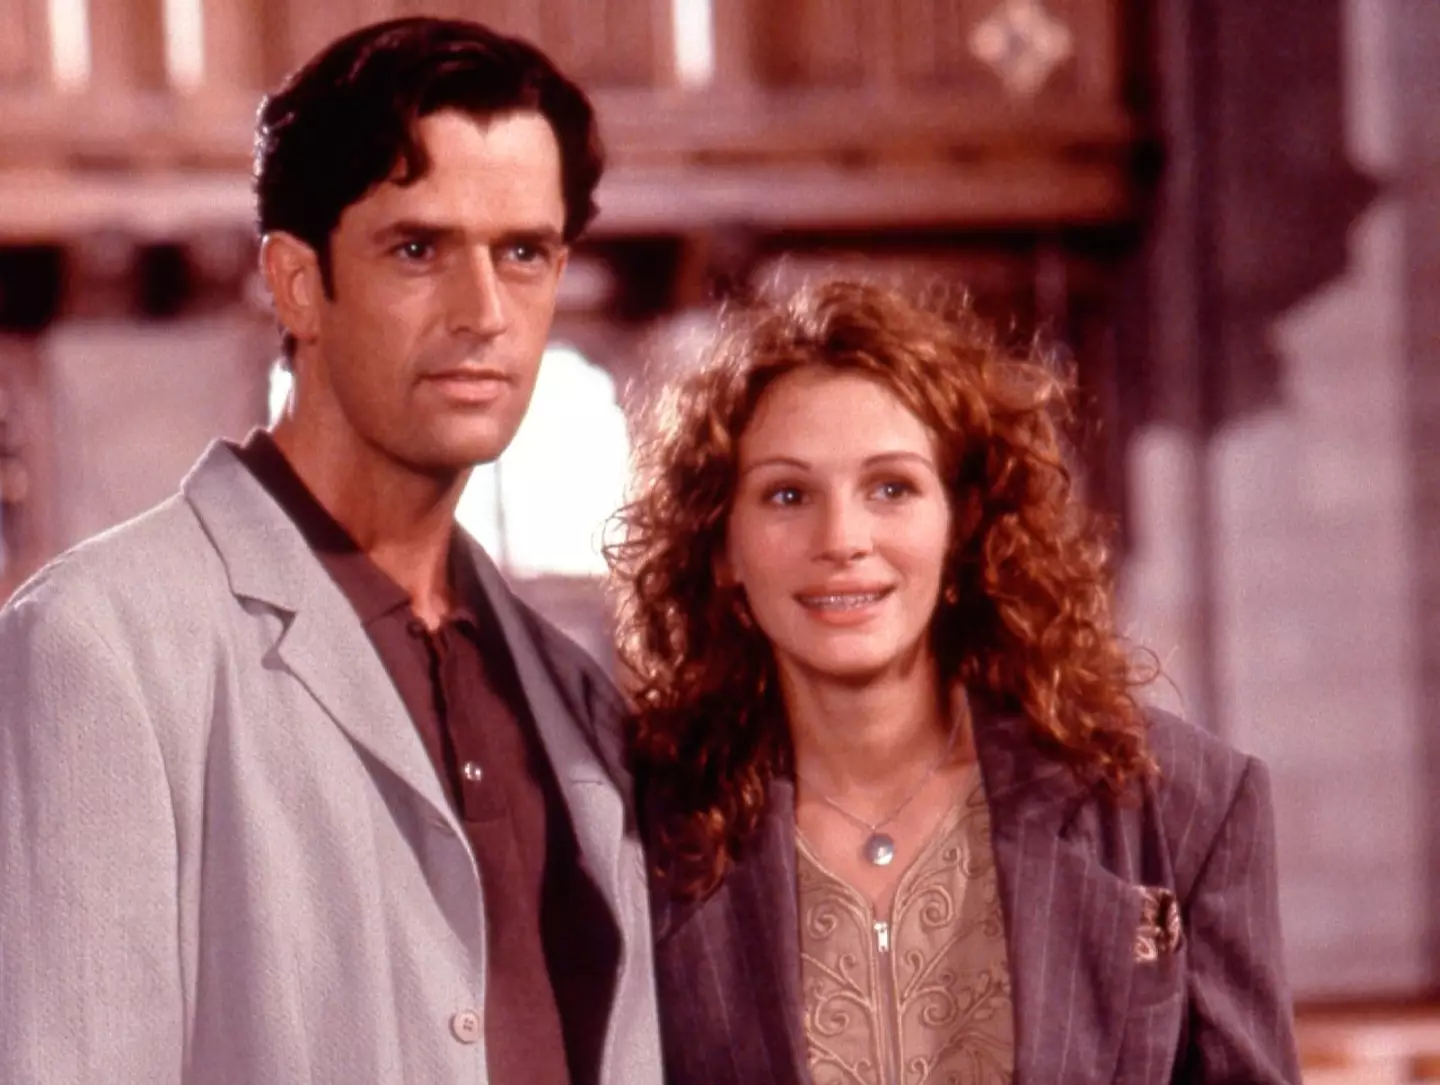 Julia Roberts and Dermot Mulroney starred in the 1997 classic rom-com My Best Friend's Wedding.